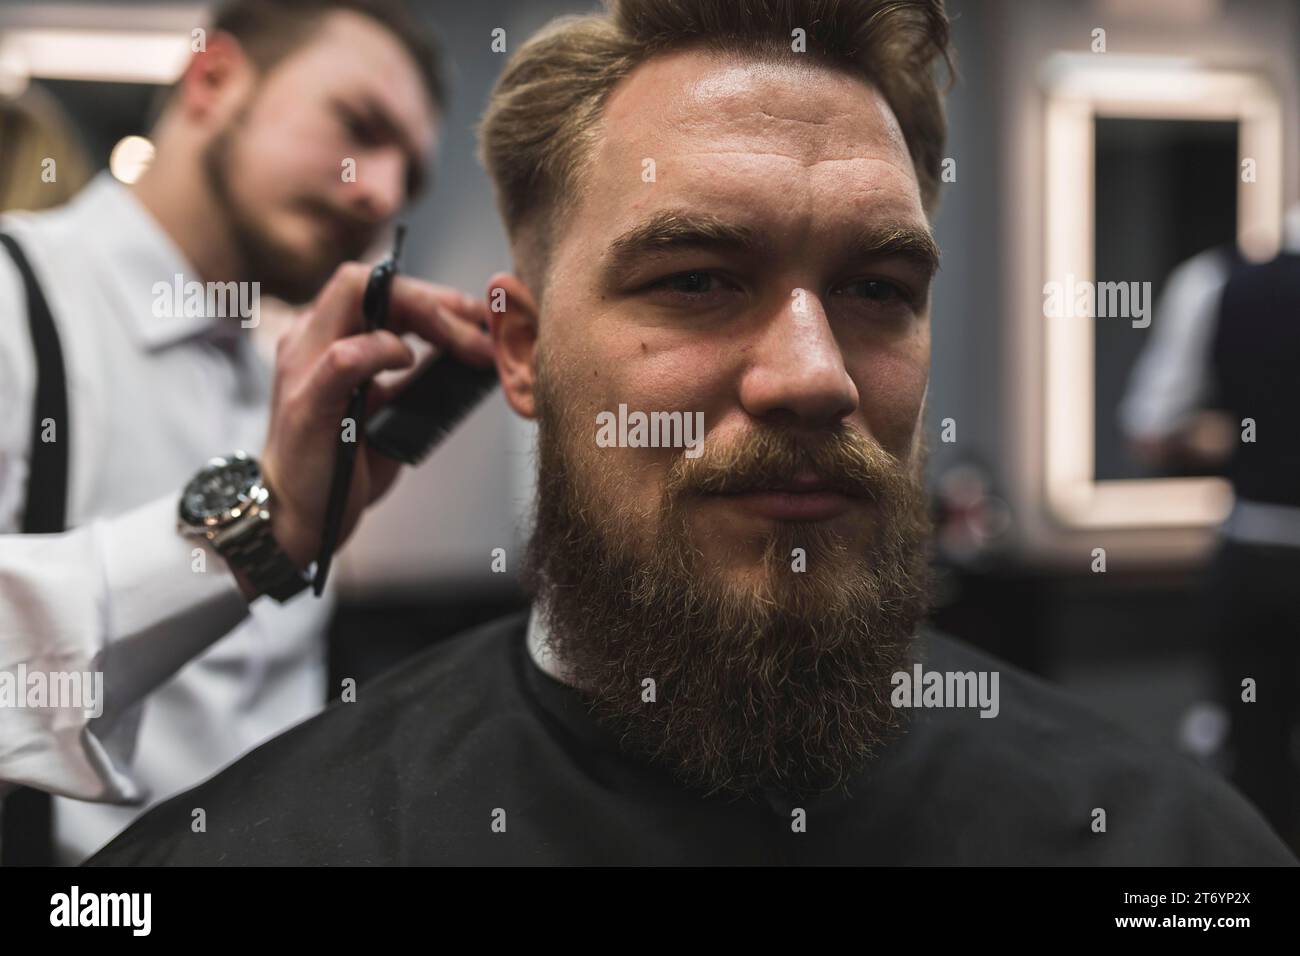 Attractive man having hair cut Stock Photo